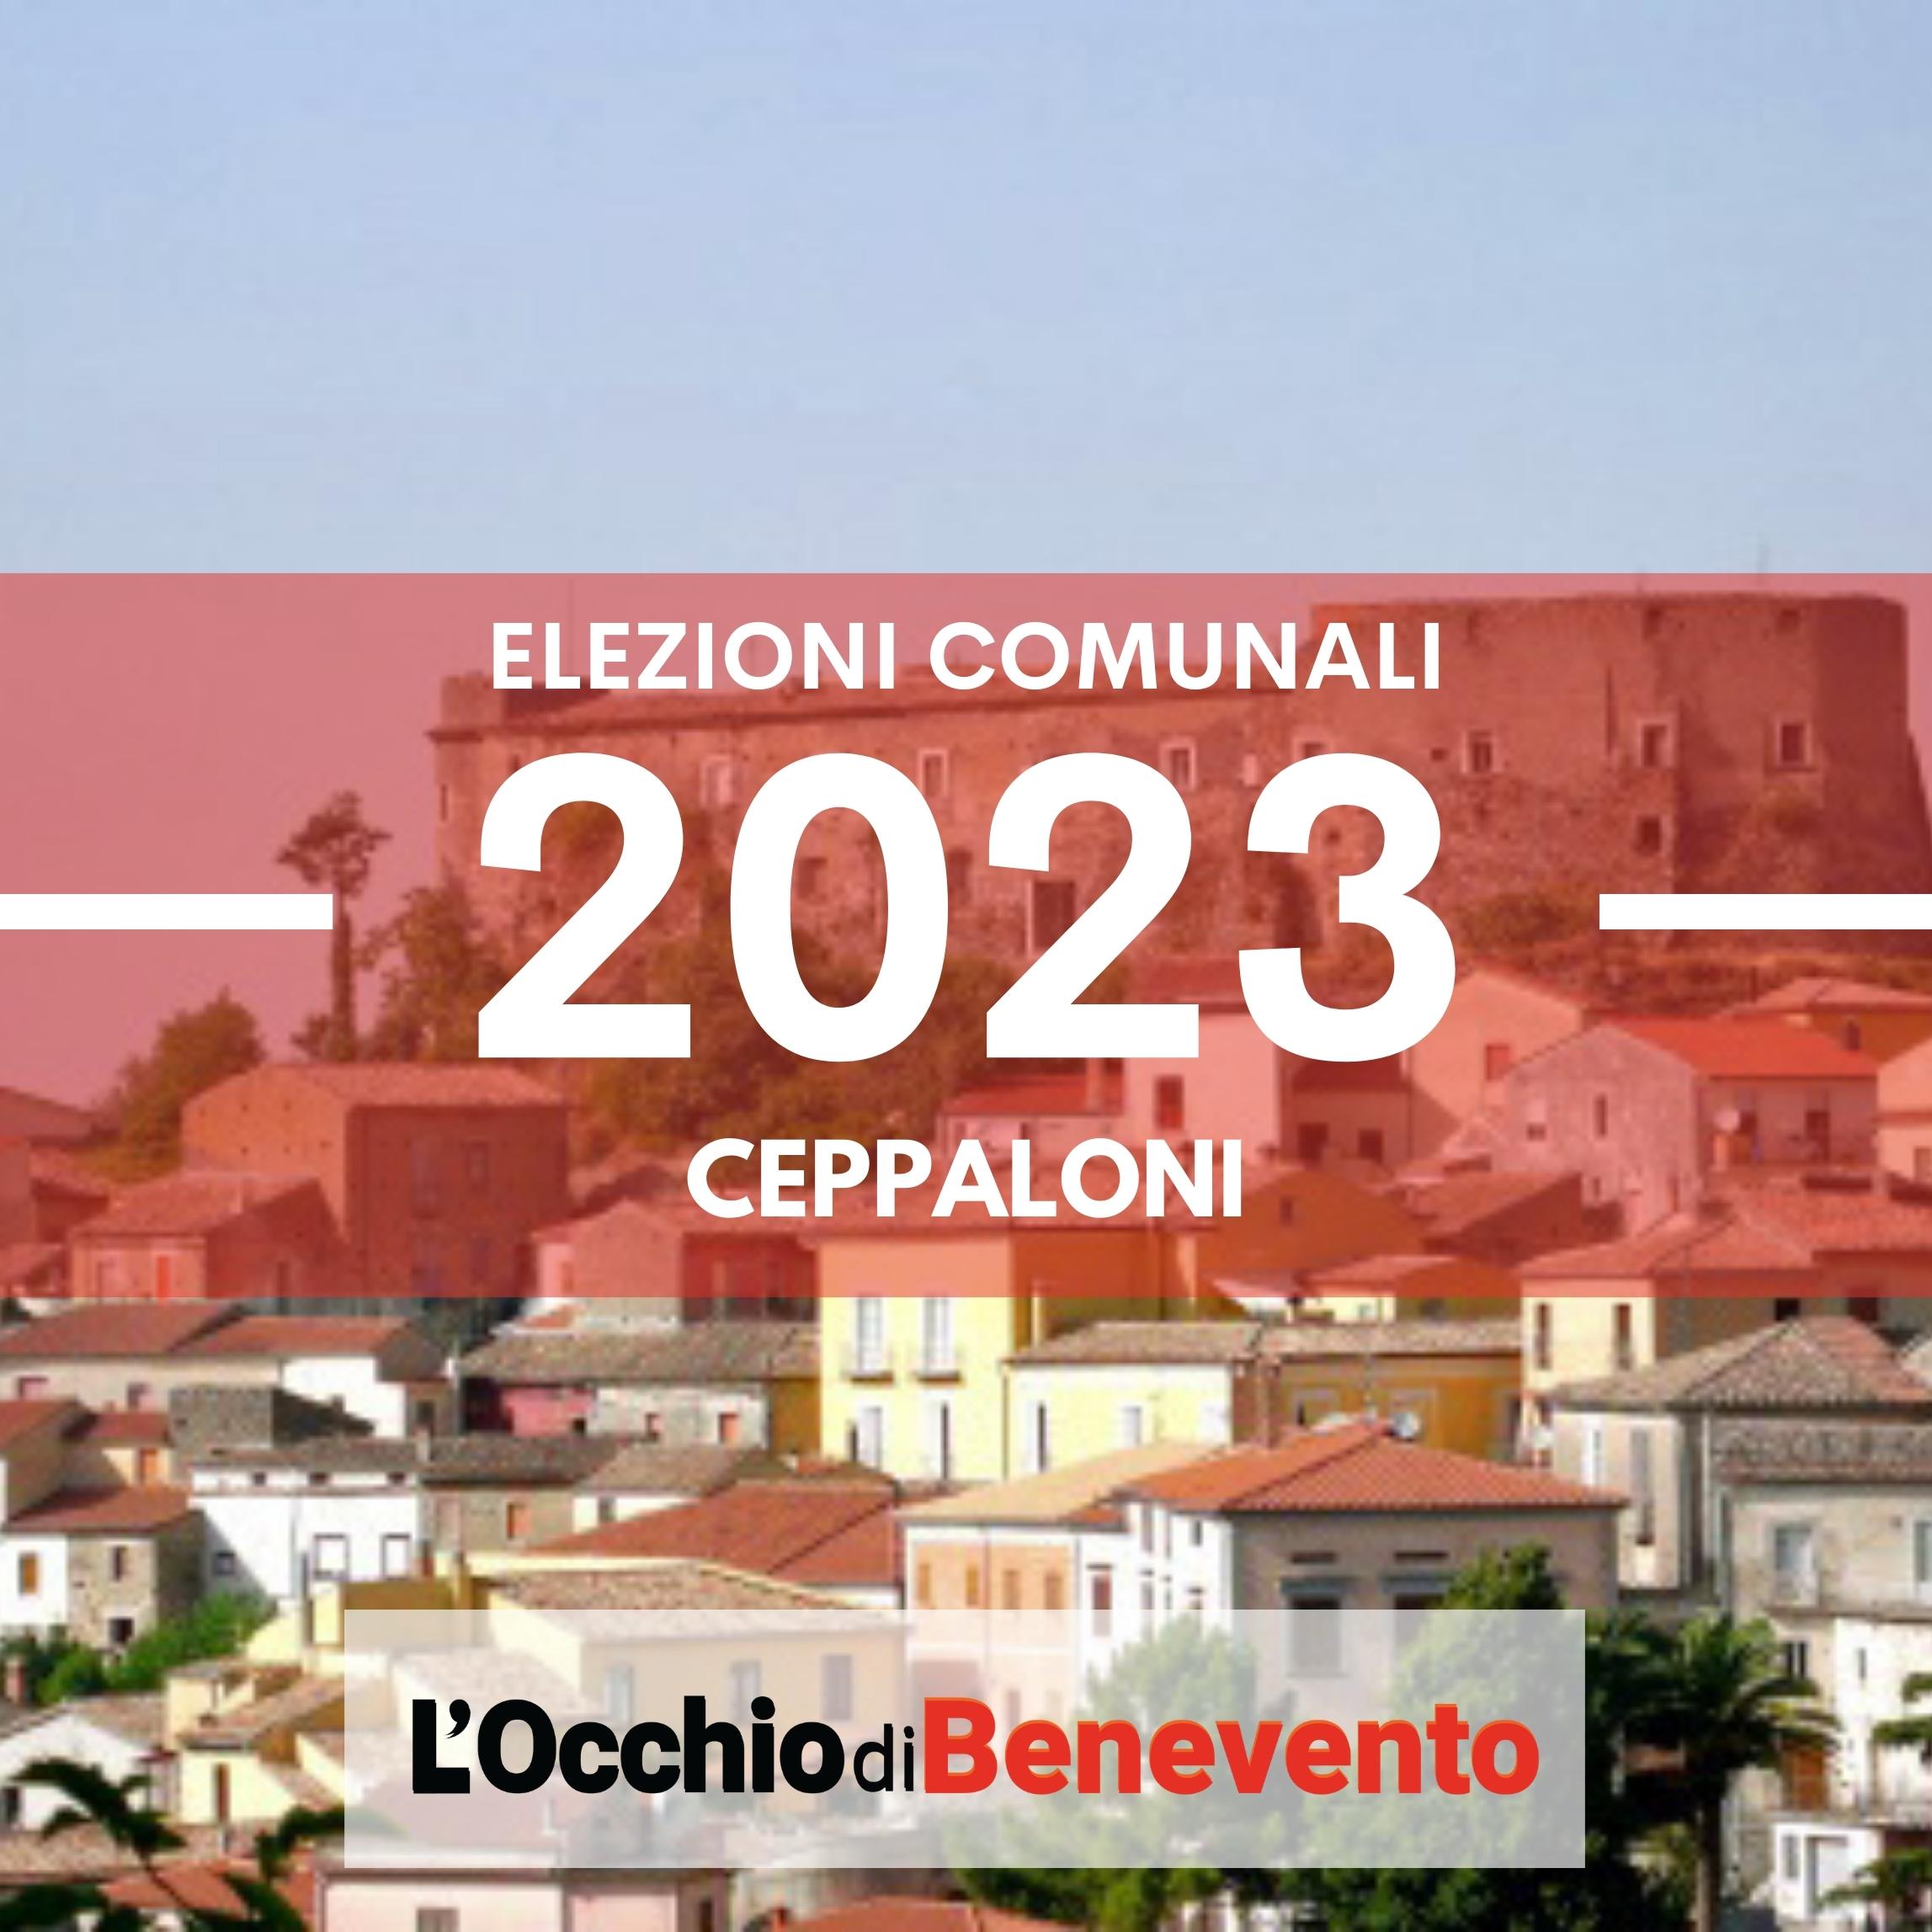 Elezioni comunali 2023 Ceppaloni liste candidati